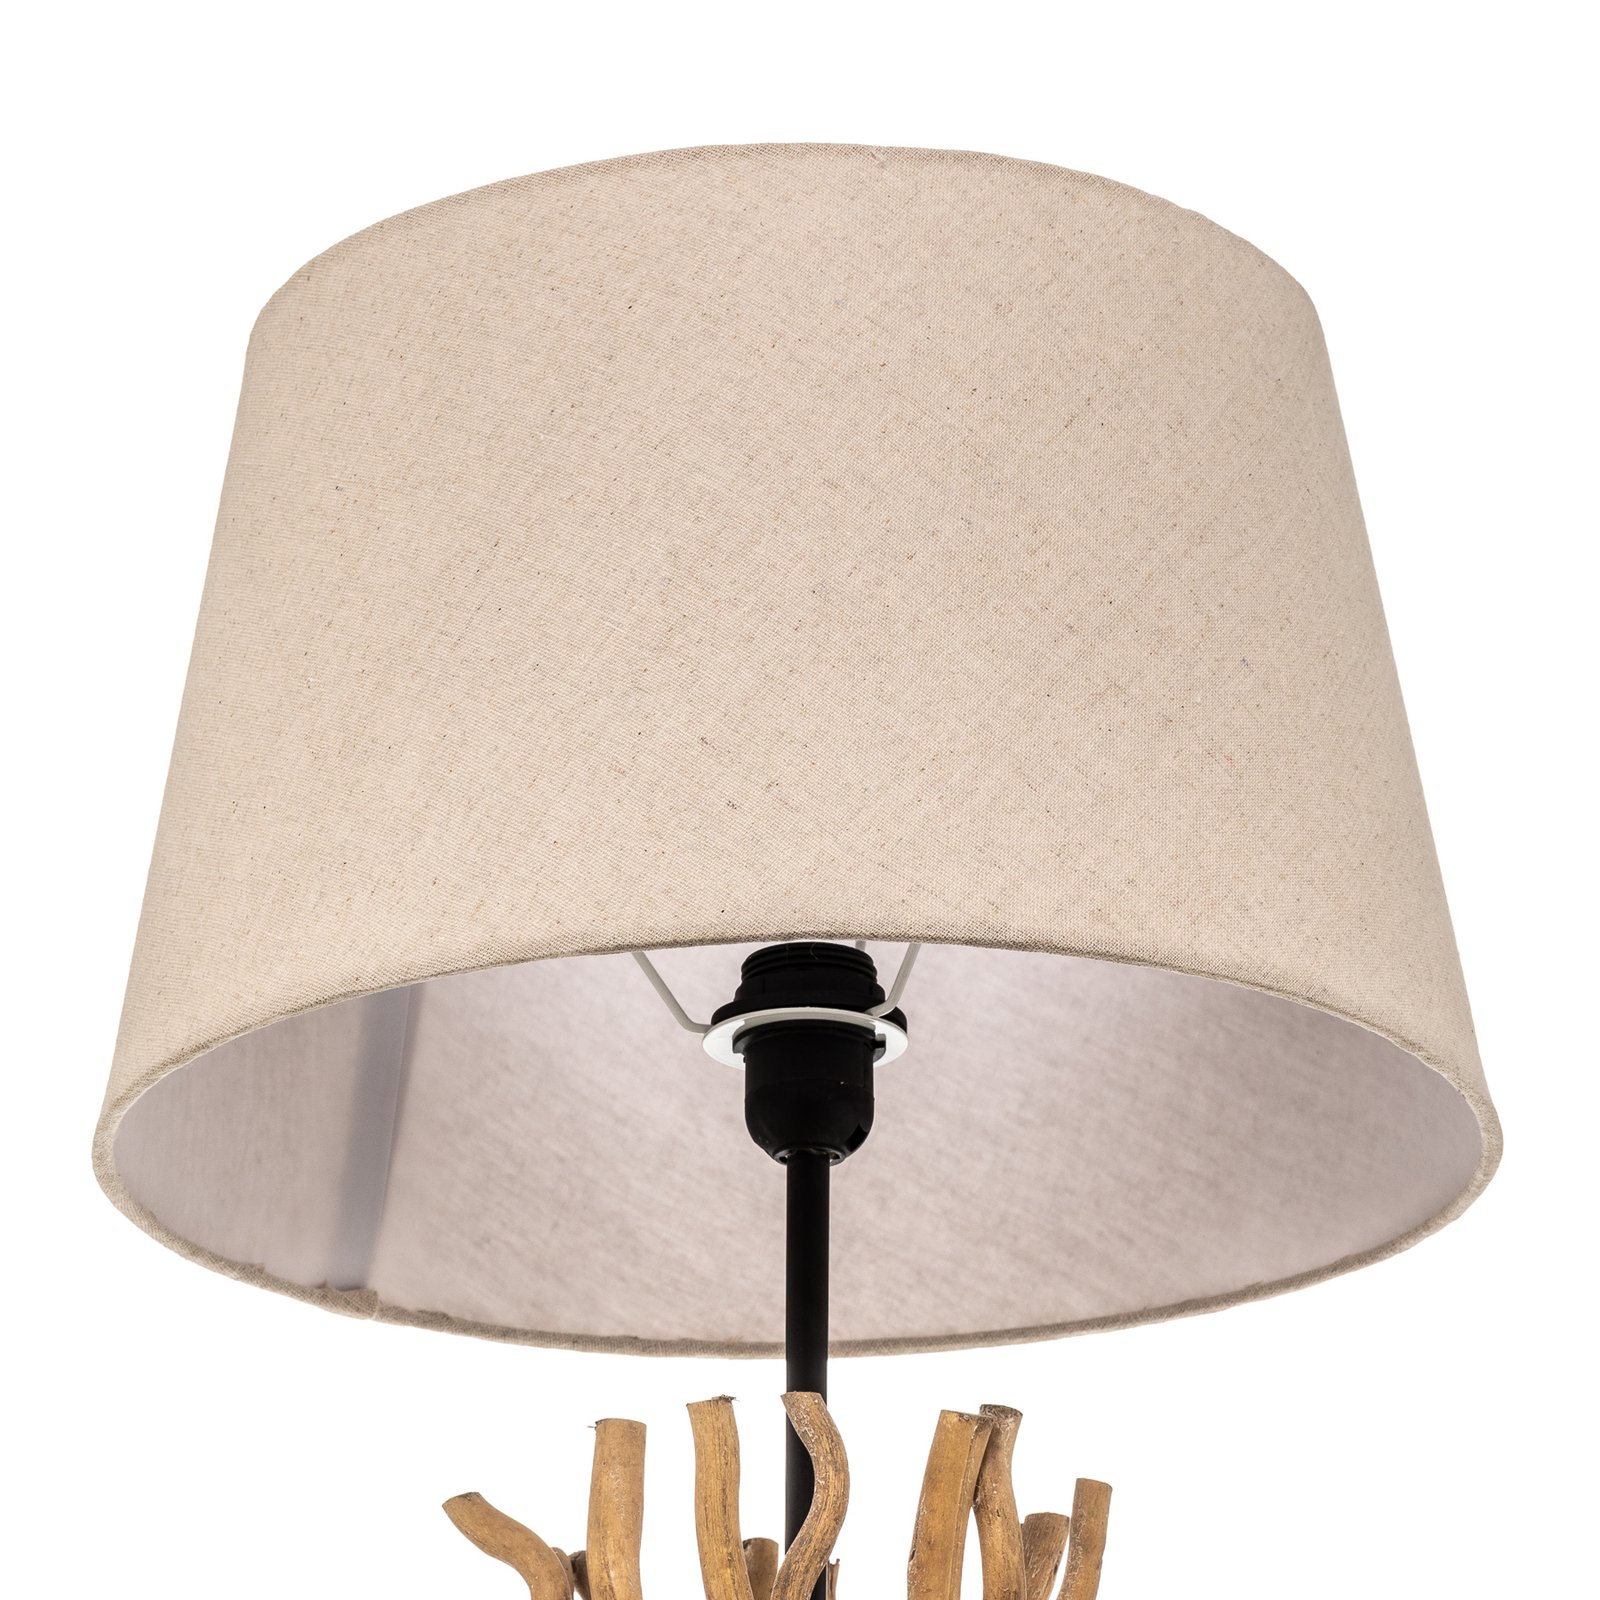 Agar floor lamp, fabric lampshade and wood element